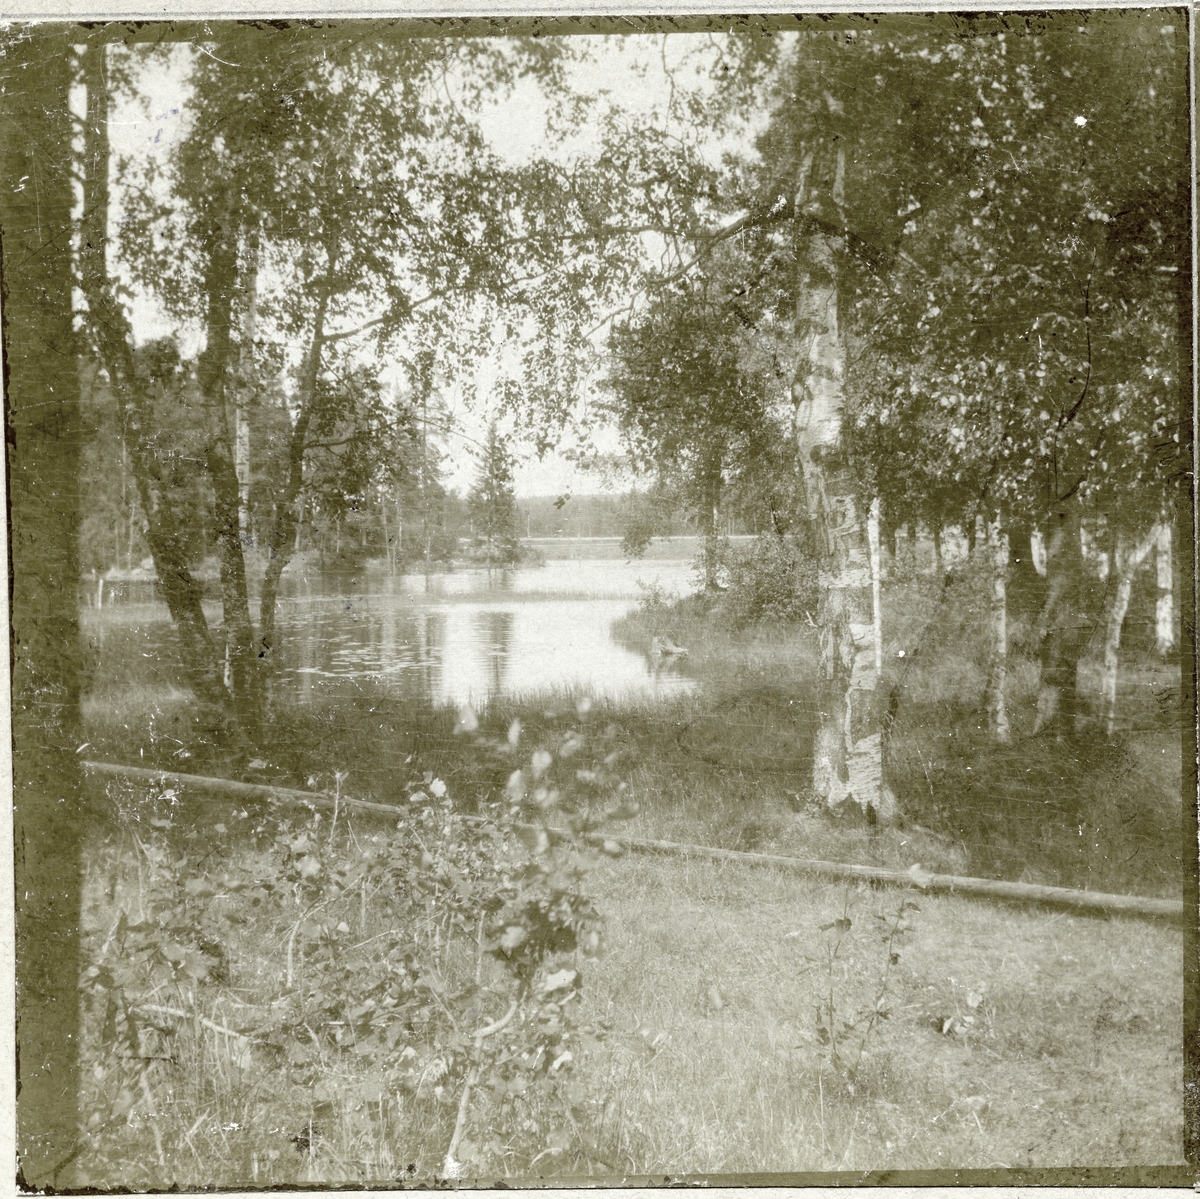 Västanfors sn, Fagersta kn, Strömsholms kanal.
Stereoskopiskt foto (3-D), 1917.